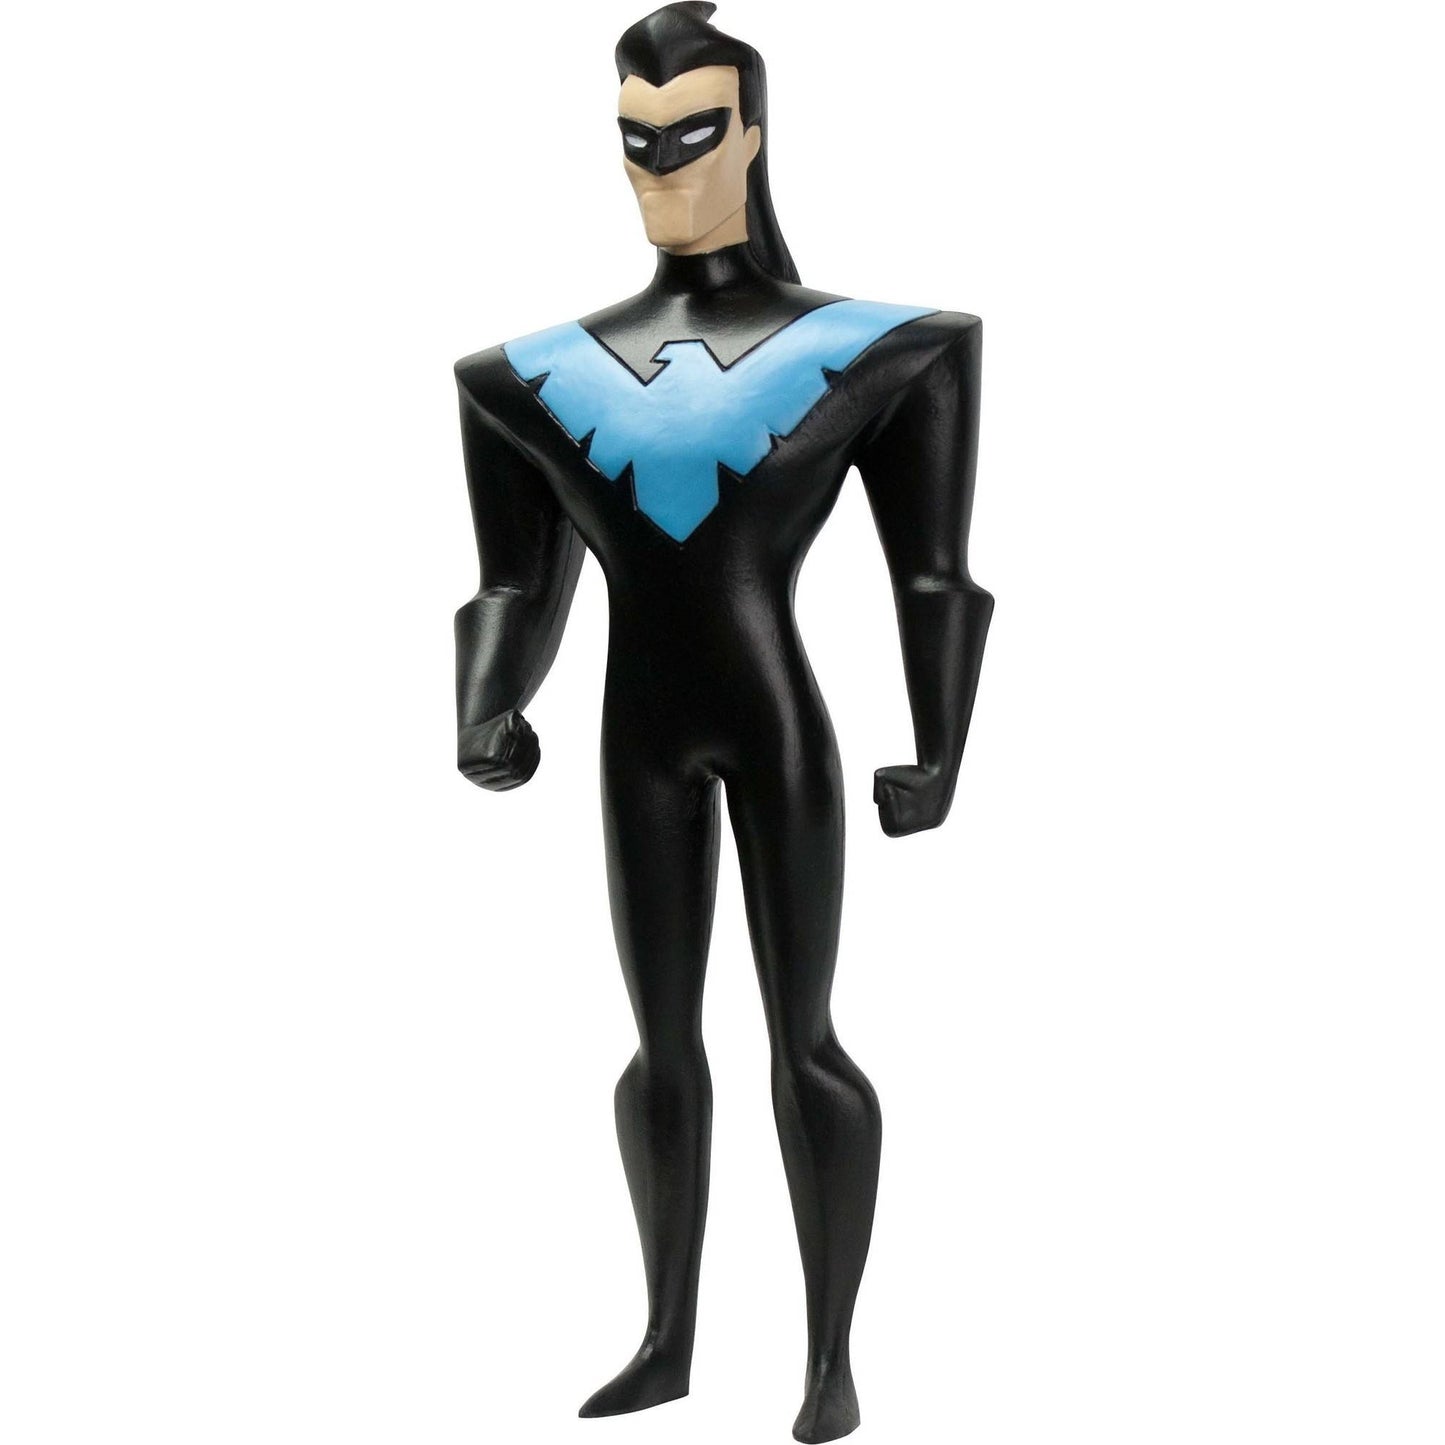 Animated Series Nightwing bendable figure